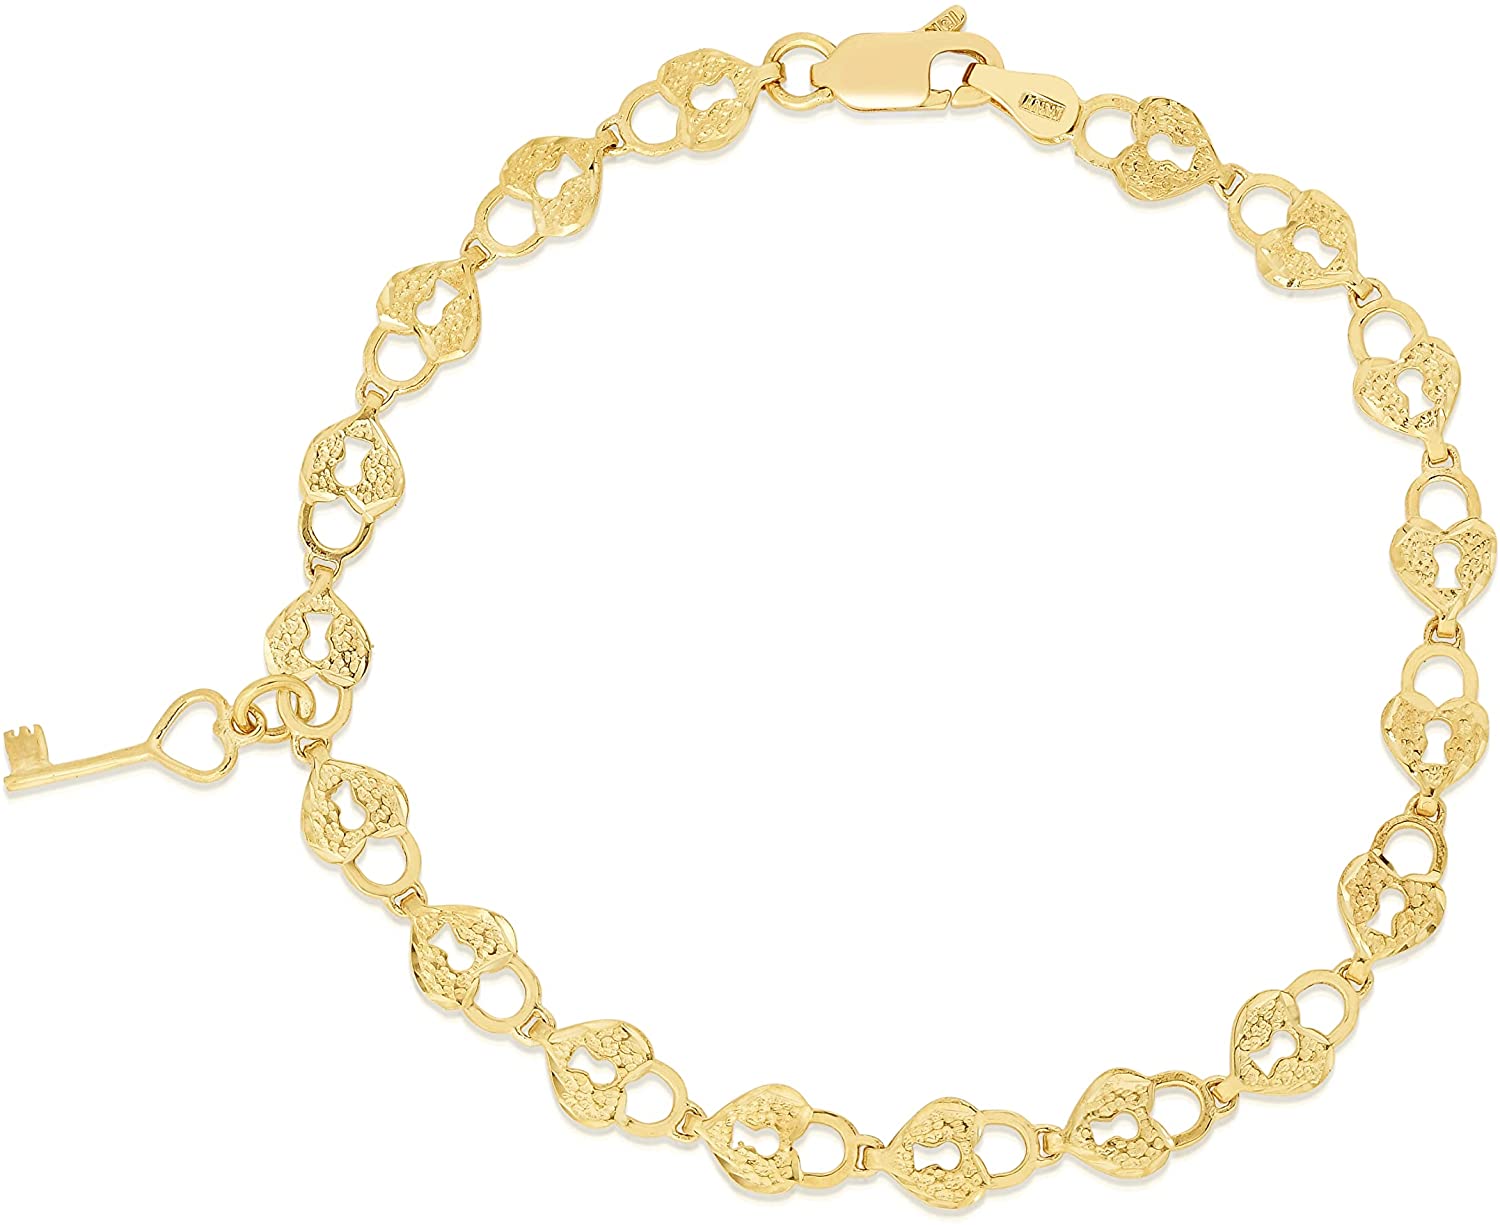 10k Yellow Gold Textured Finish Heart Shape Lock and Key Link Charm Bracelet